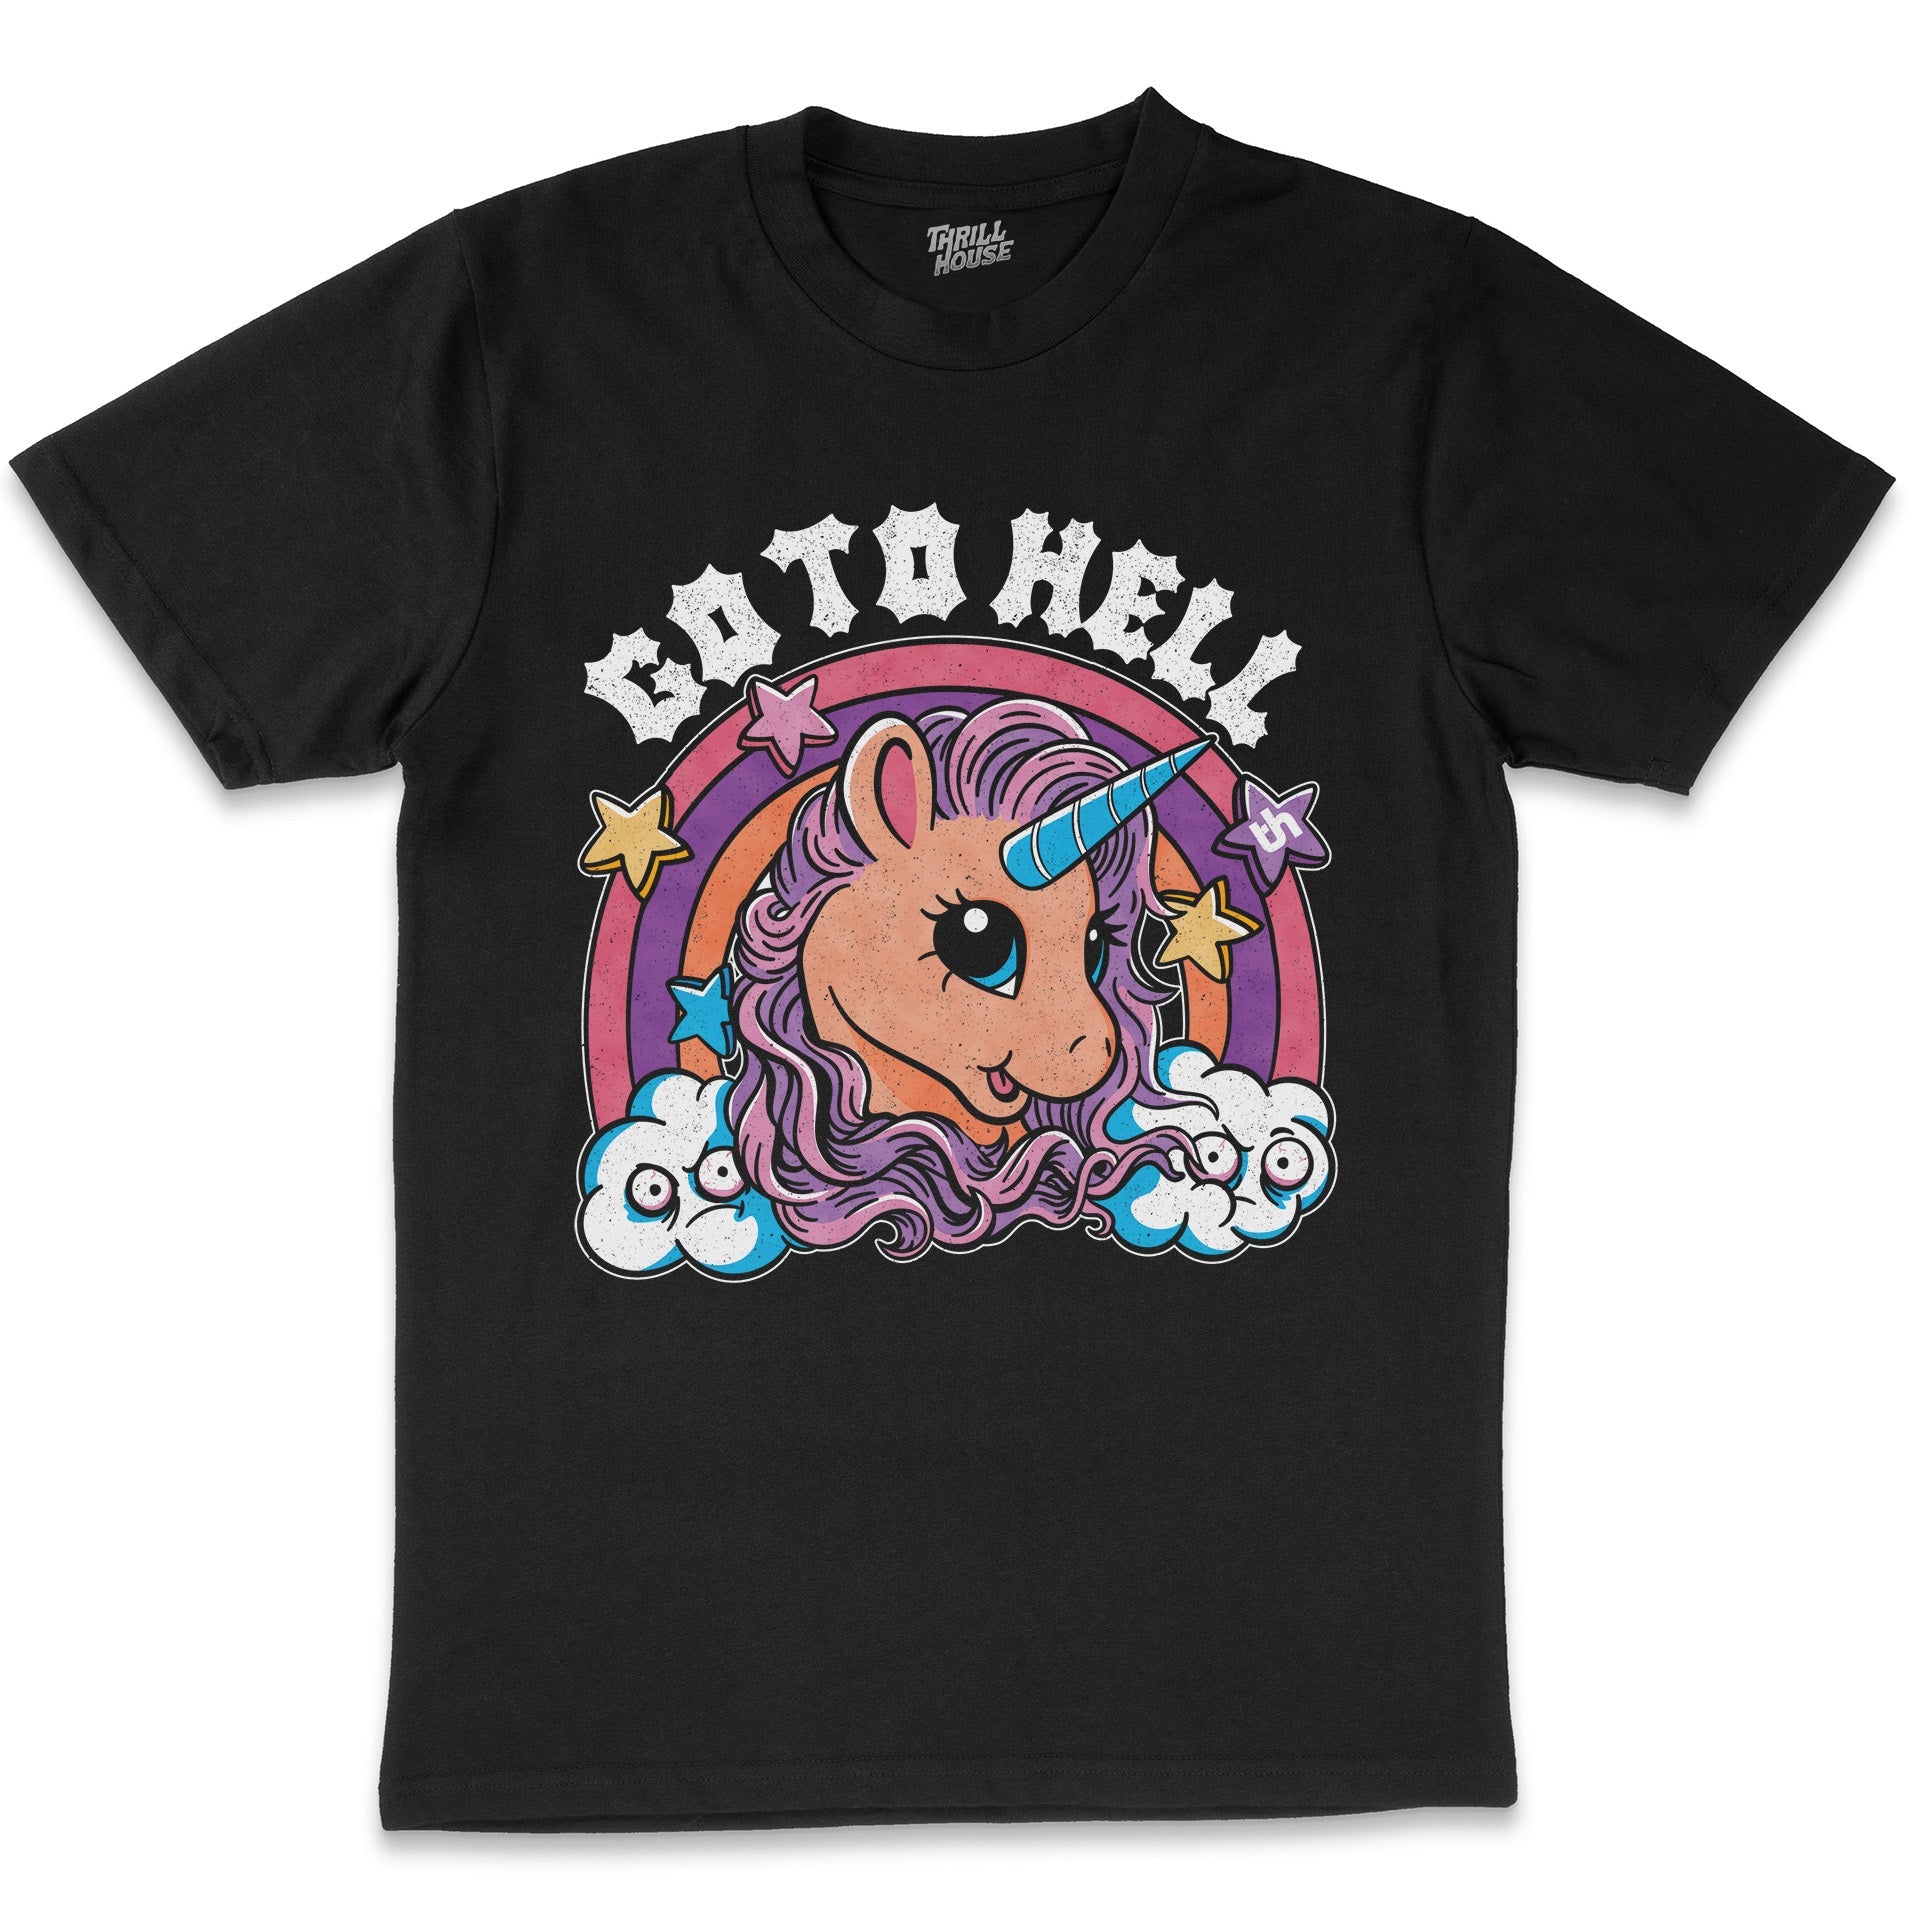 Go to Hell Funny Rude Unicorn Anti-Social Slogan Offensive Cute Fantasy Cotton T-Shirt